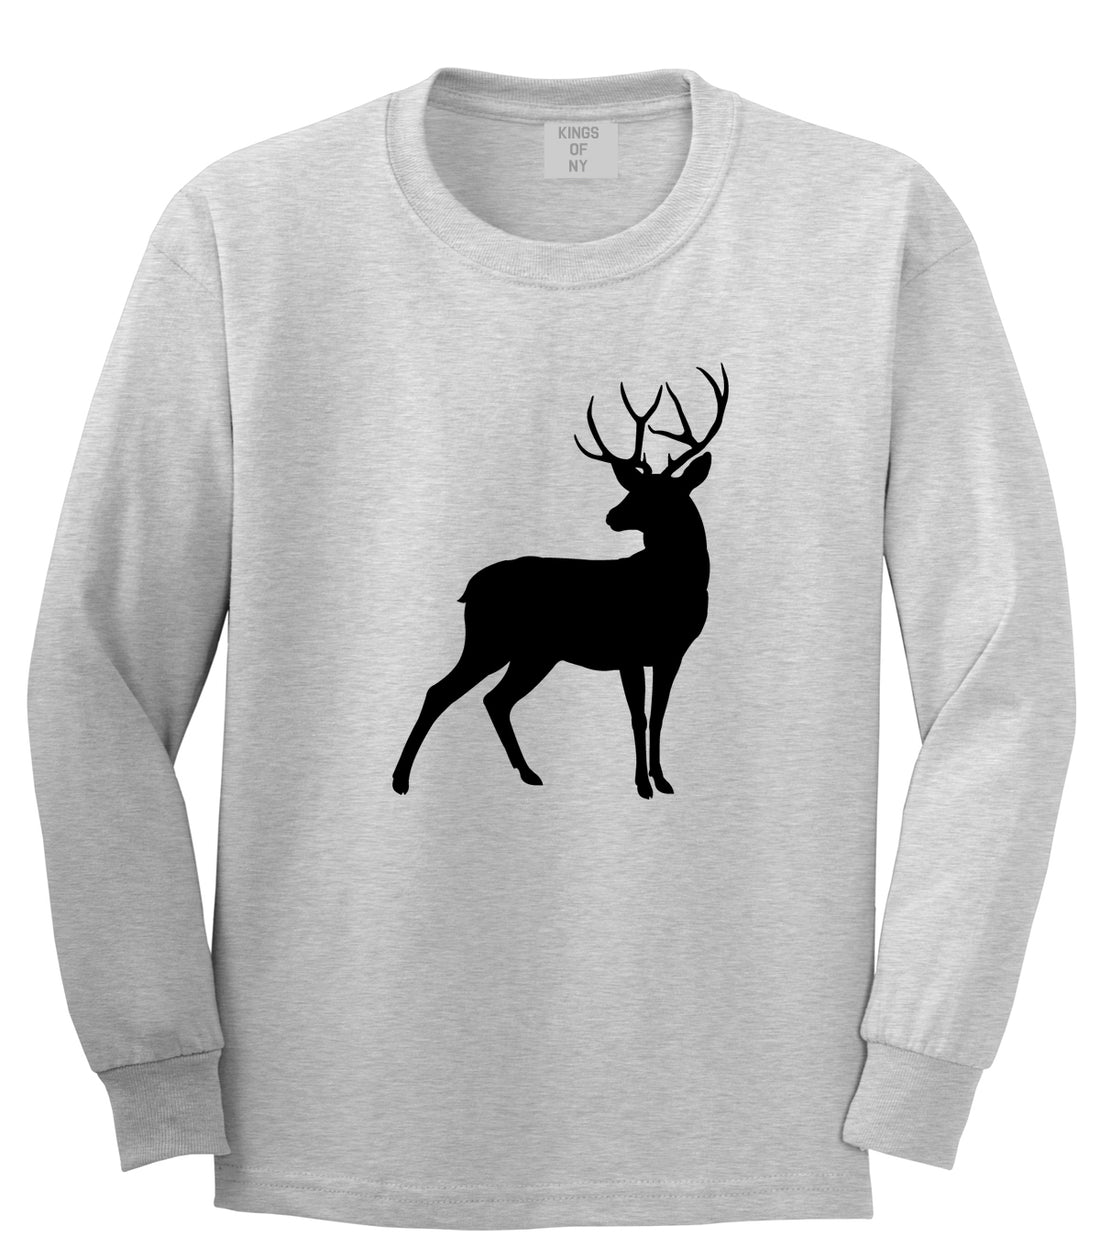 Deer Hunting Hunter Mens Grey Long Sleeve T-Shirt by Kings Of NY